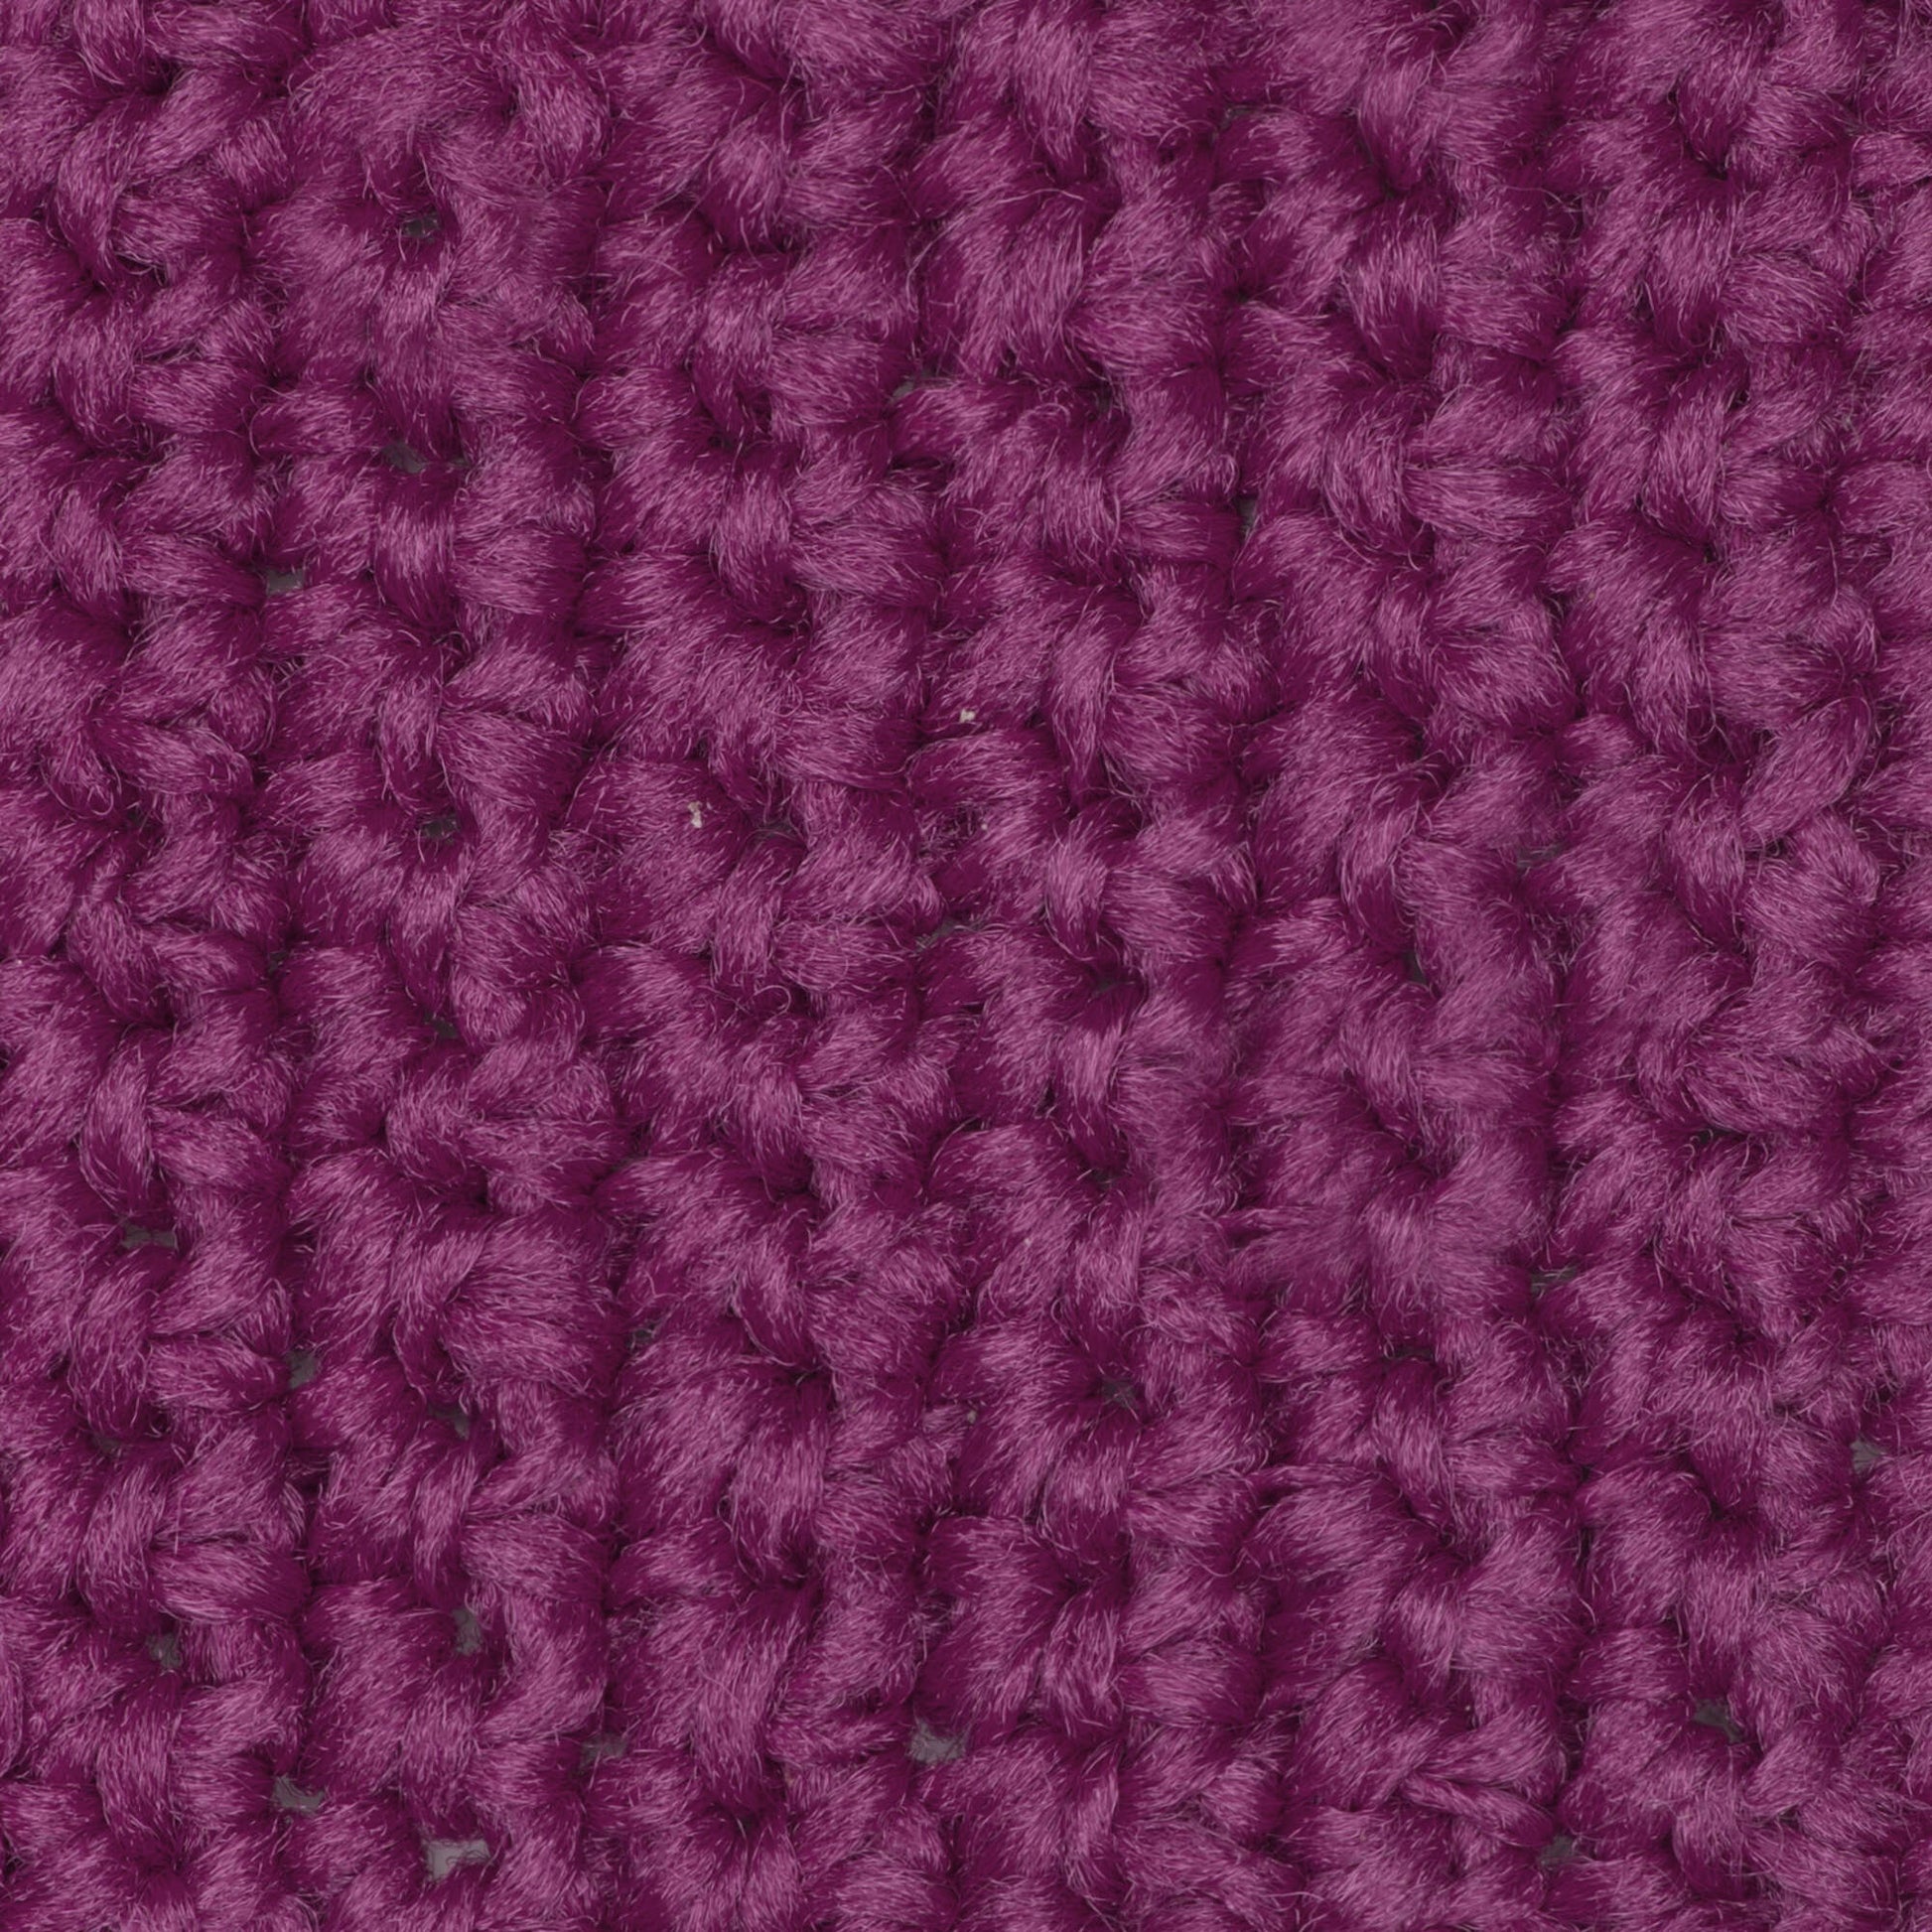 Phentex Slipper & Craft Yarn - Discontinued Shades Grape